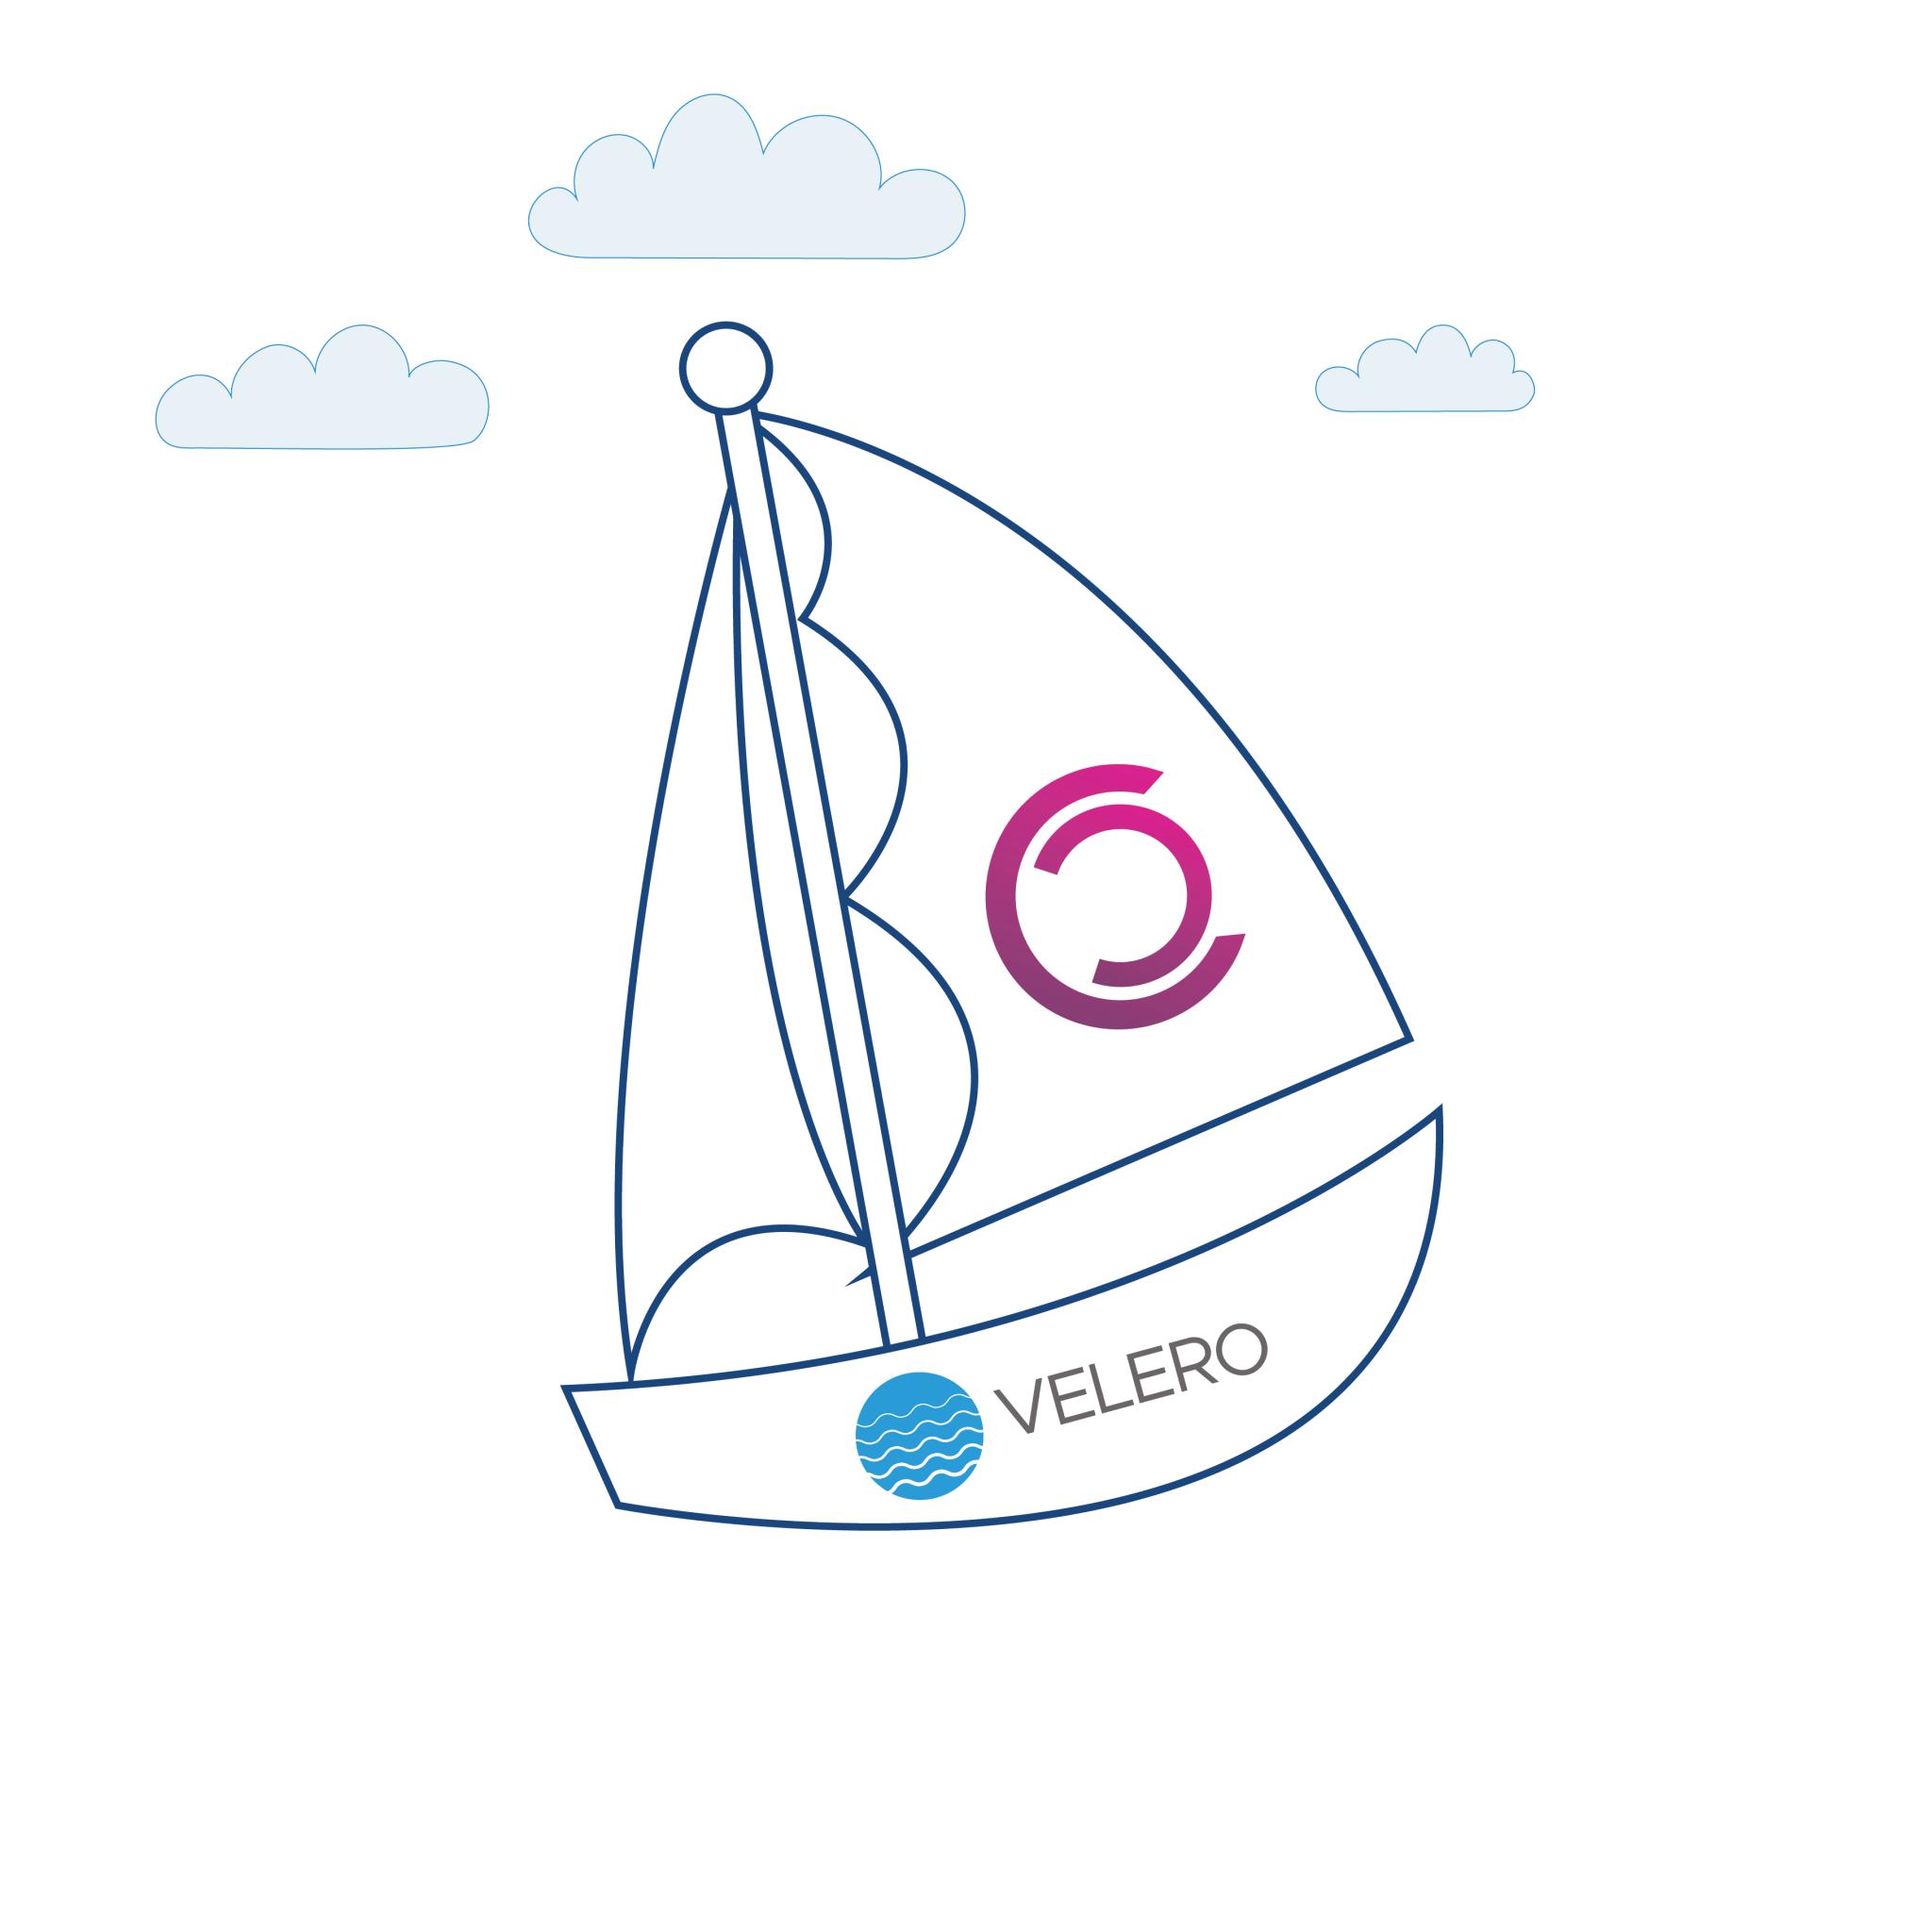 Velero Support and Velero Management